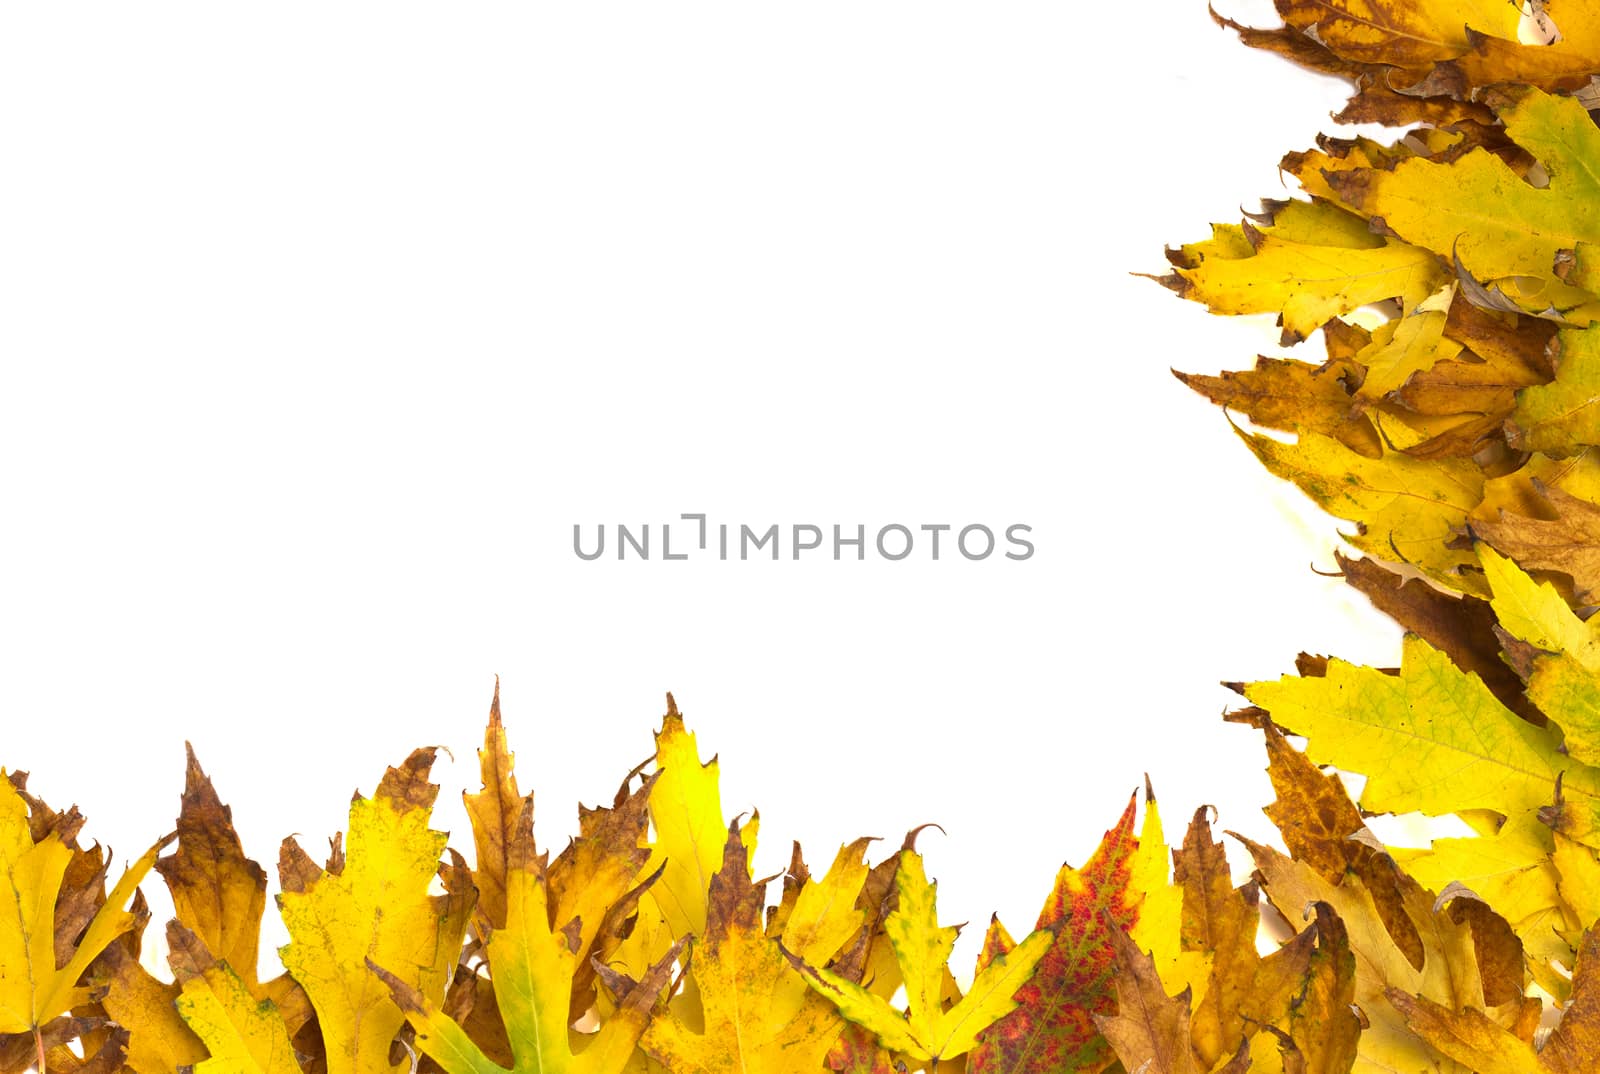 Autumn frame by Kidza